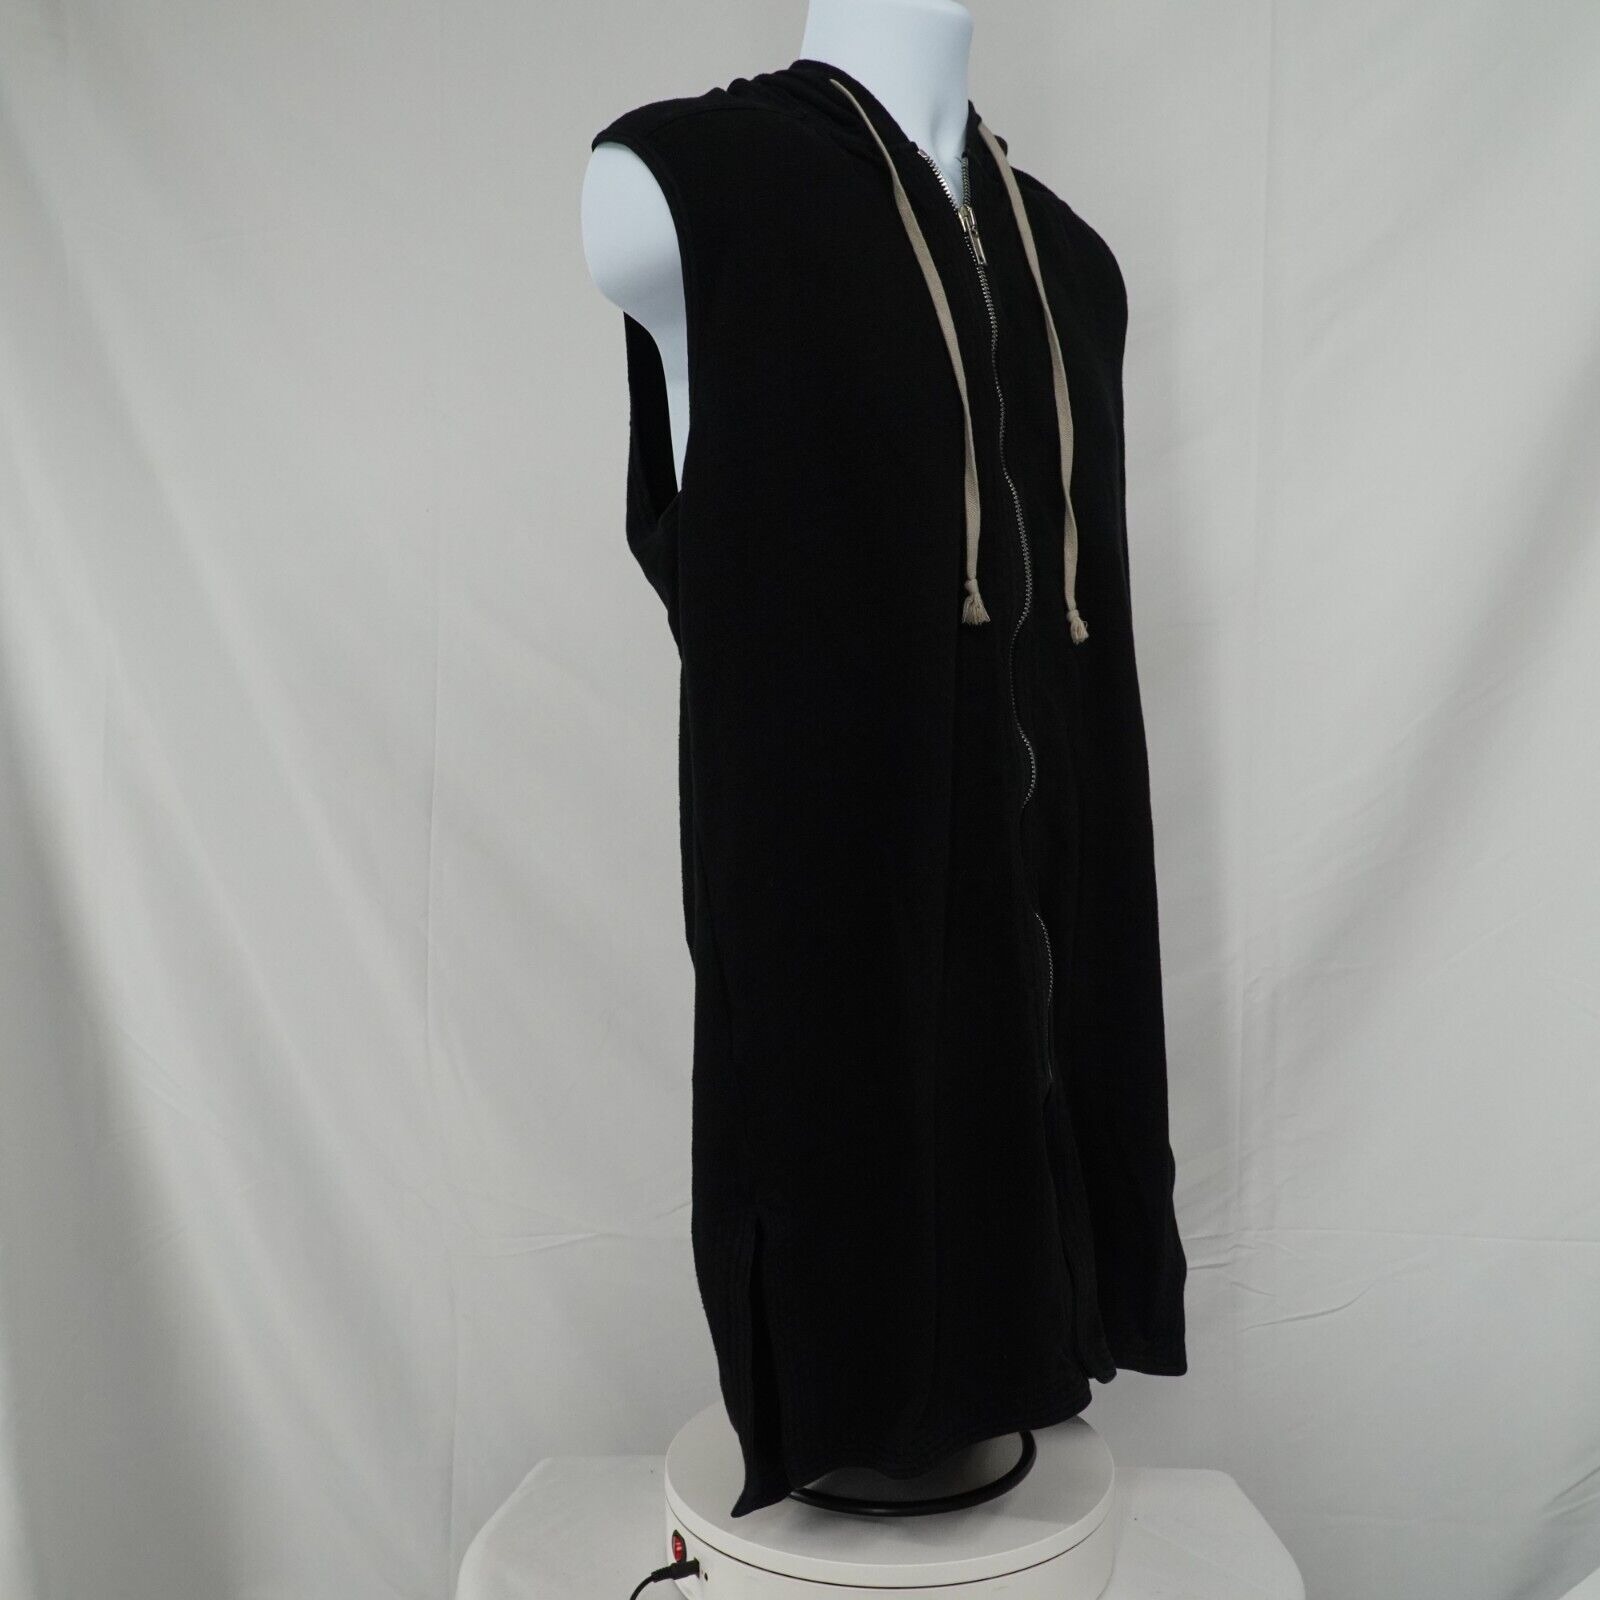 Black Zip Up Sleeveless Jacket Hoodie Cotton - Medium - 20